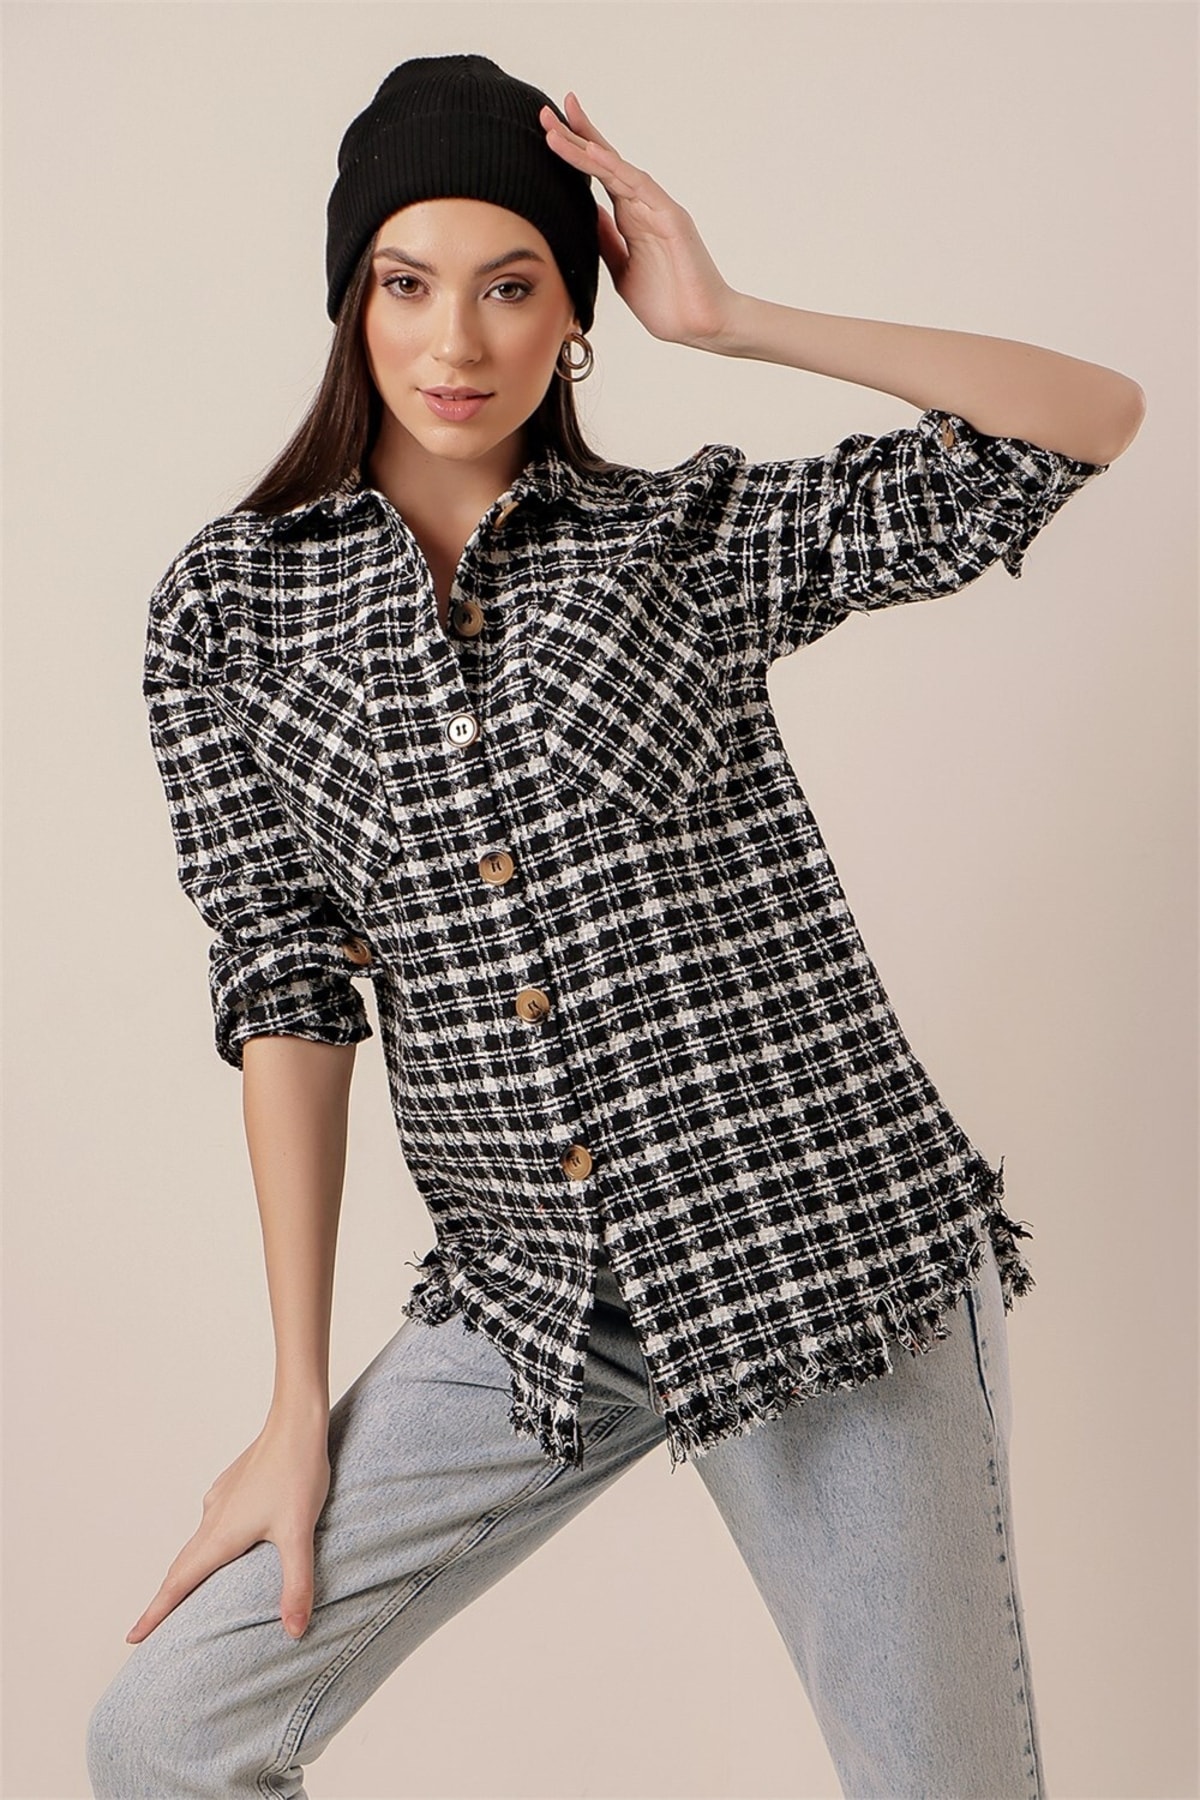 By Saygı Shanel Checkered Shirt with Tassels Skirt Black